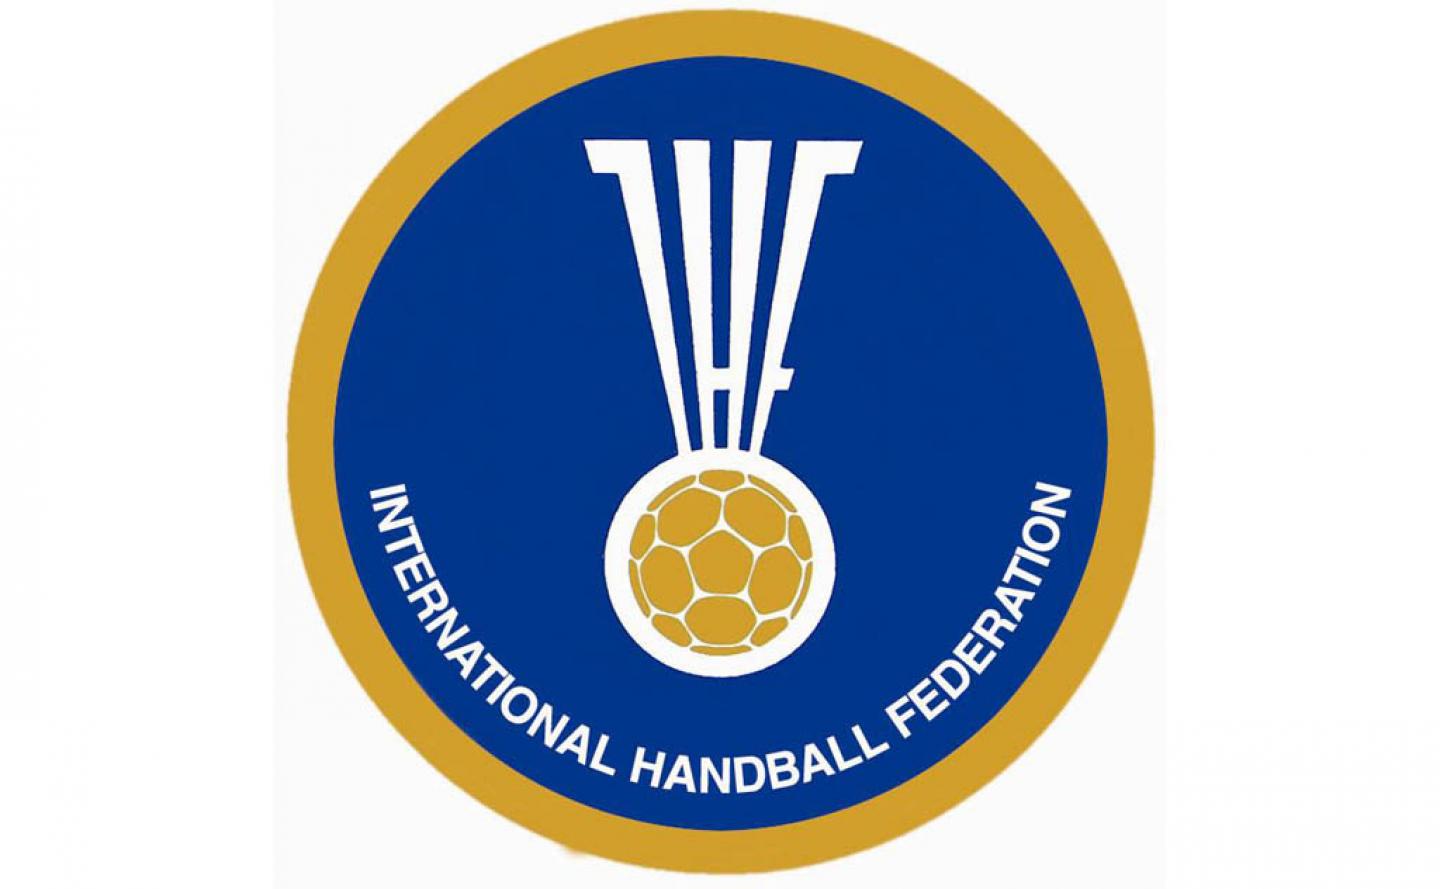 Qatar Handball Association and Royal Spanish Handball Federation held elections